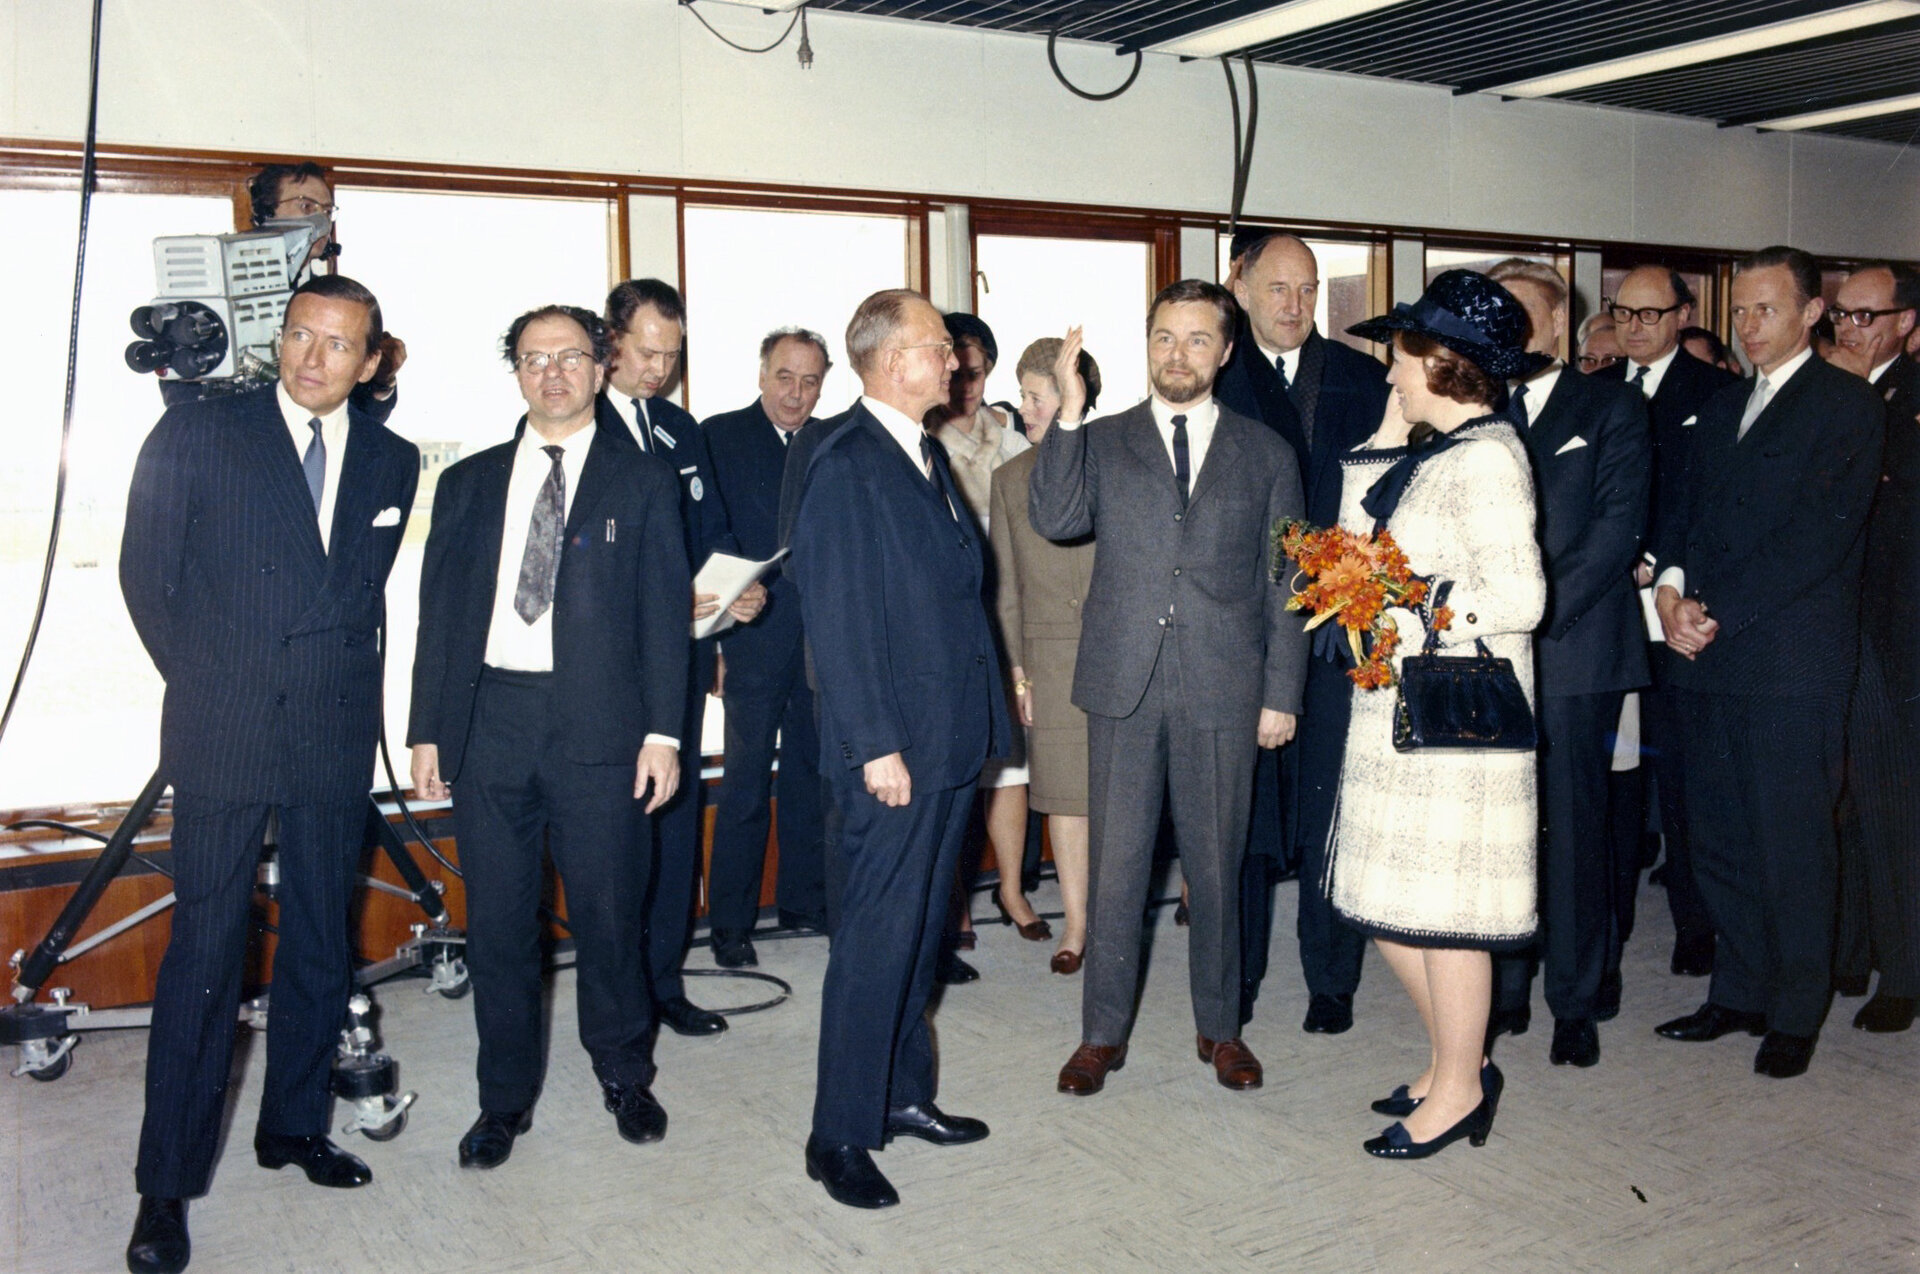 Princess Beatrix at the inauguration of ESTEC 1968